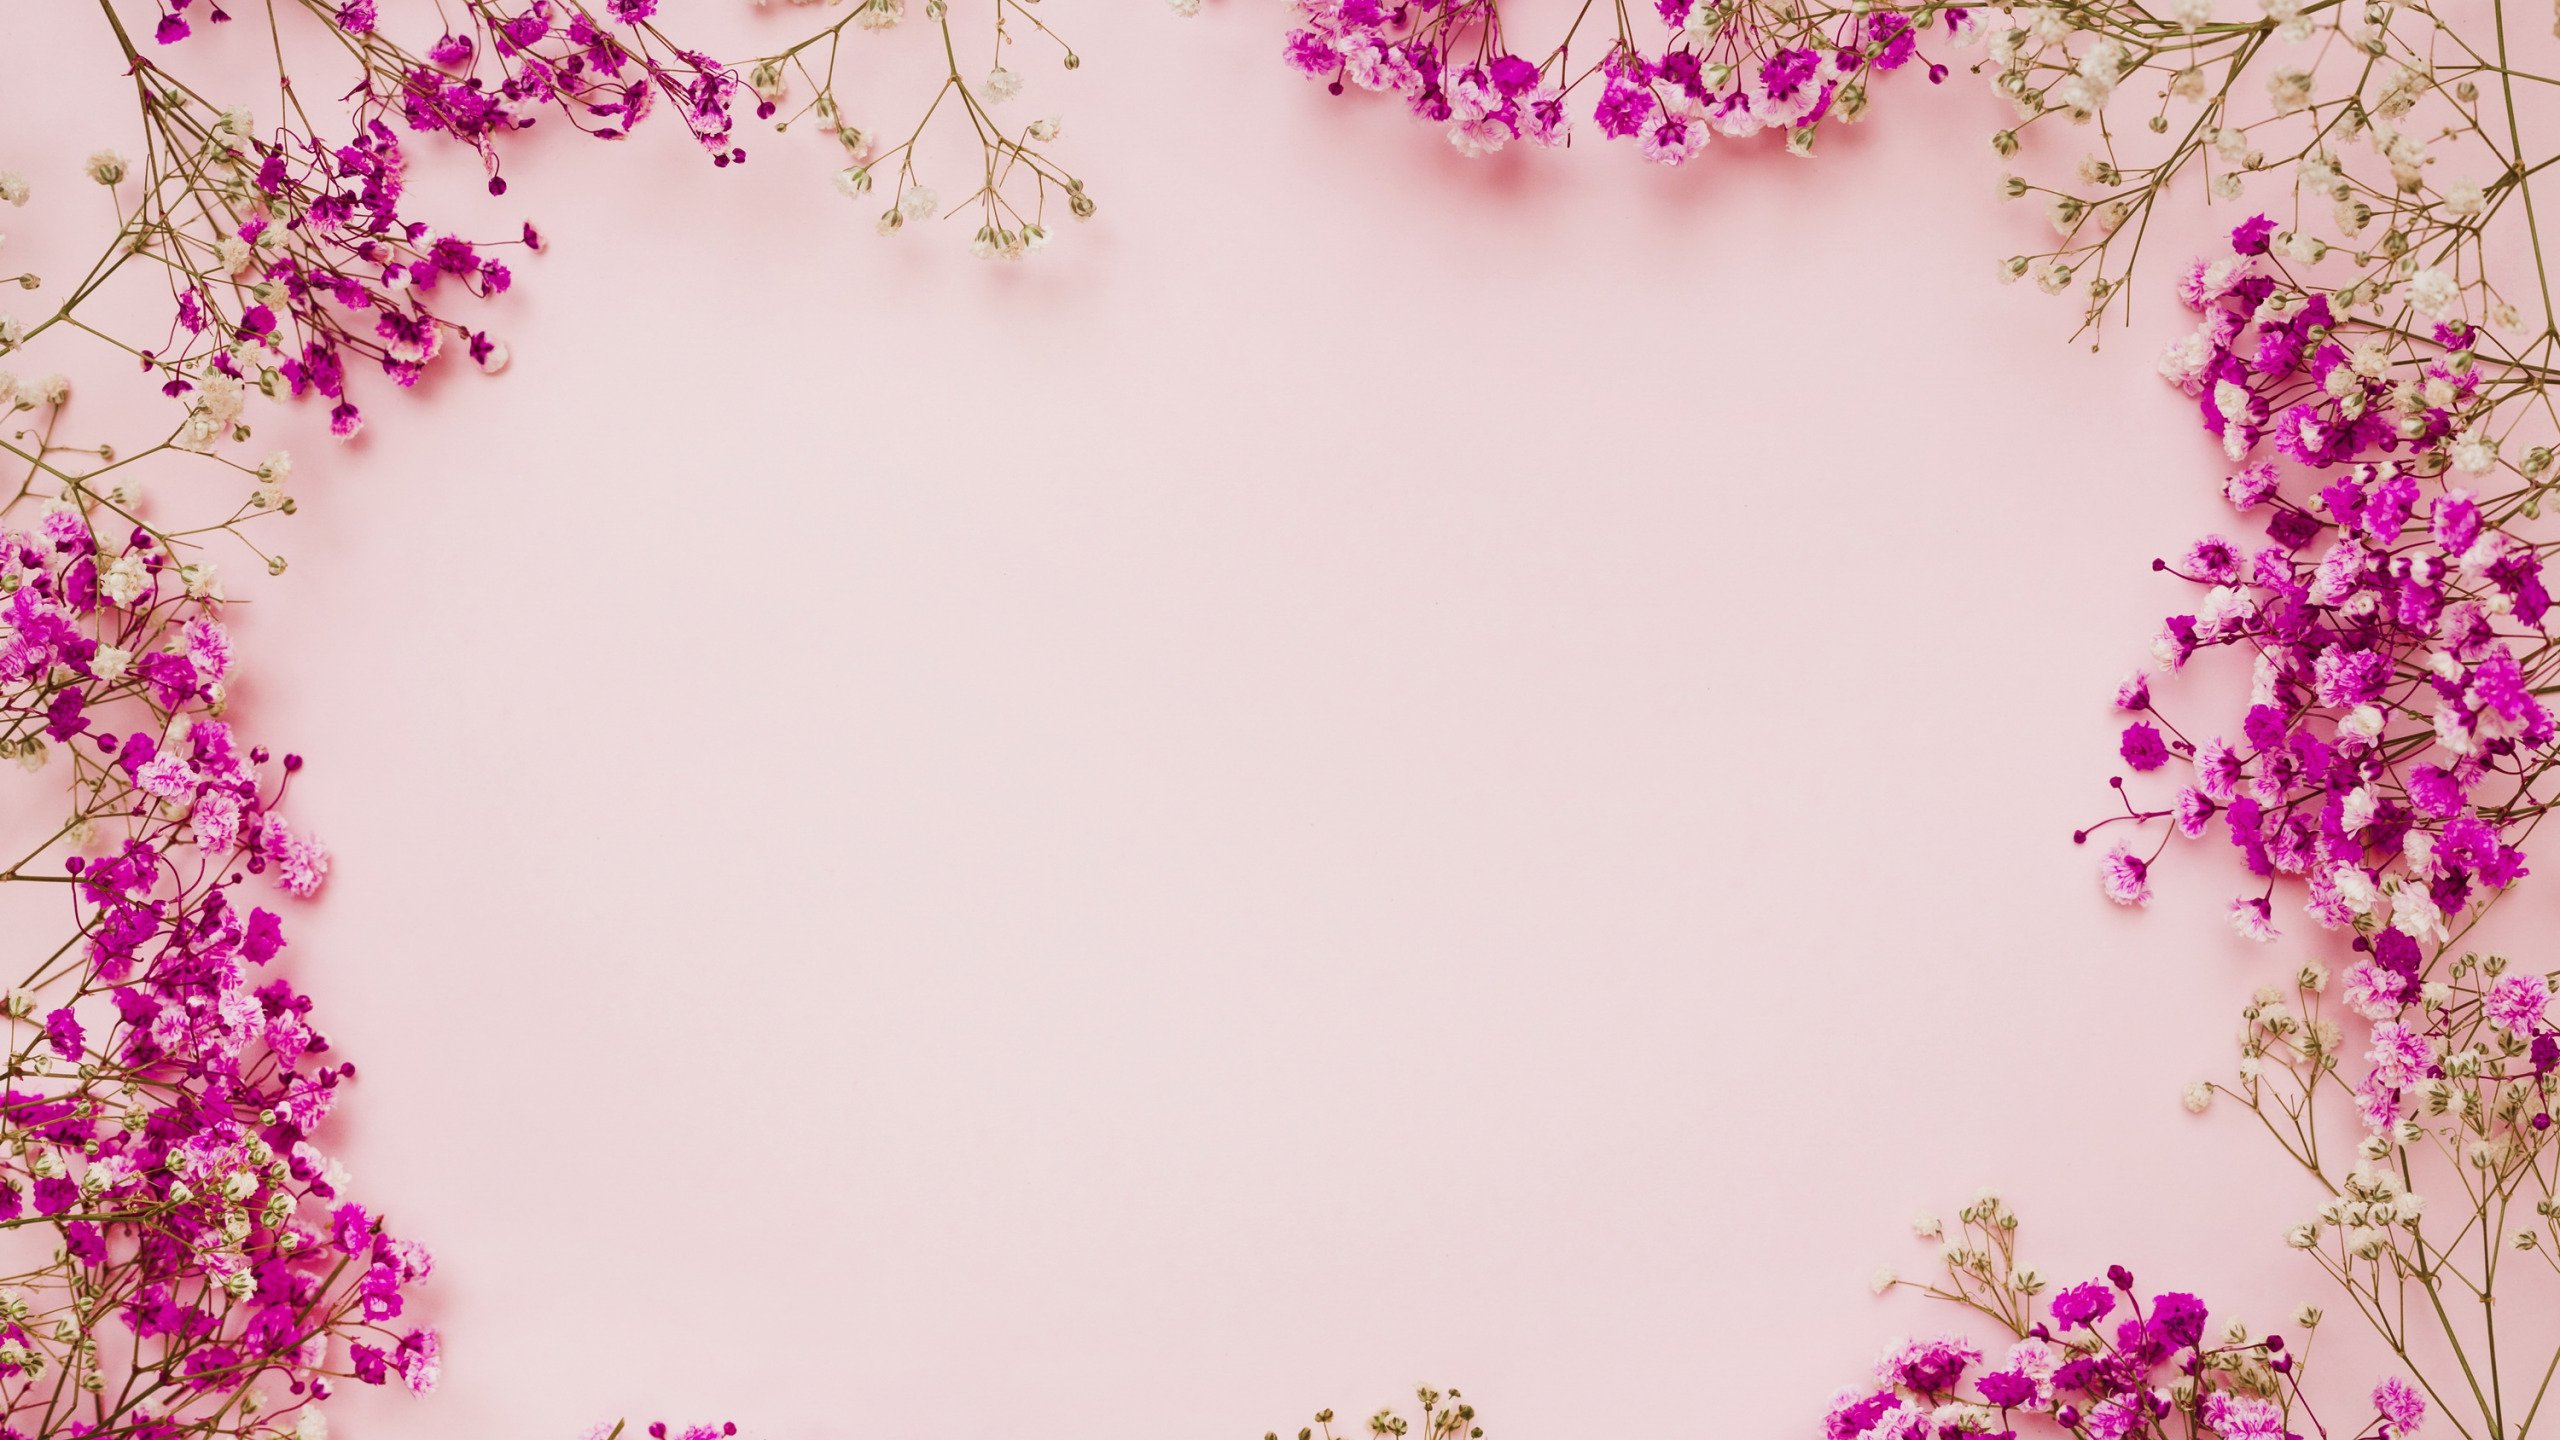 Light pink floral background - 70 photo